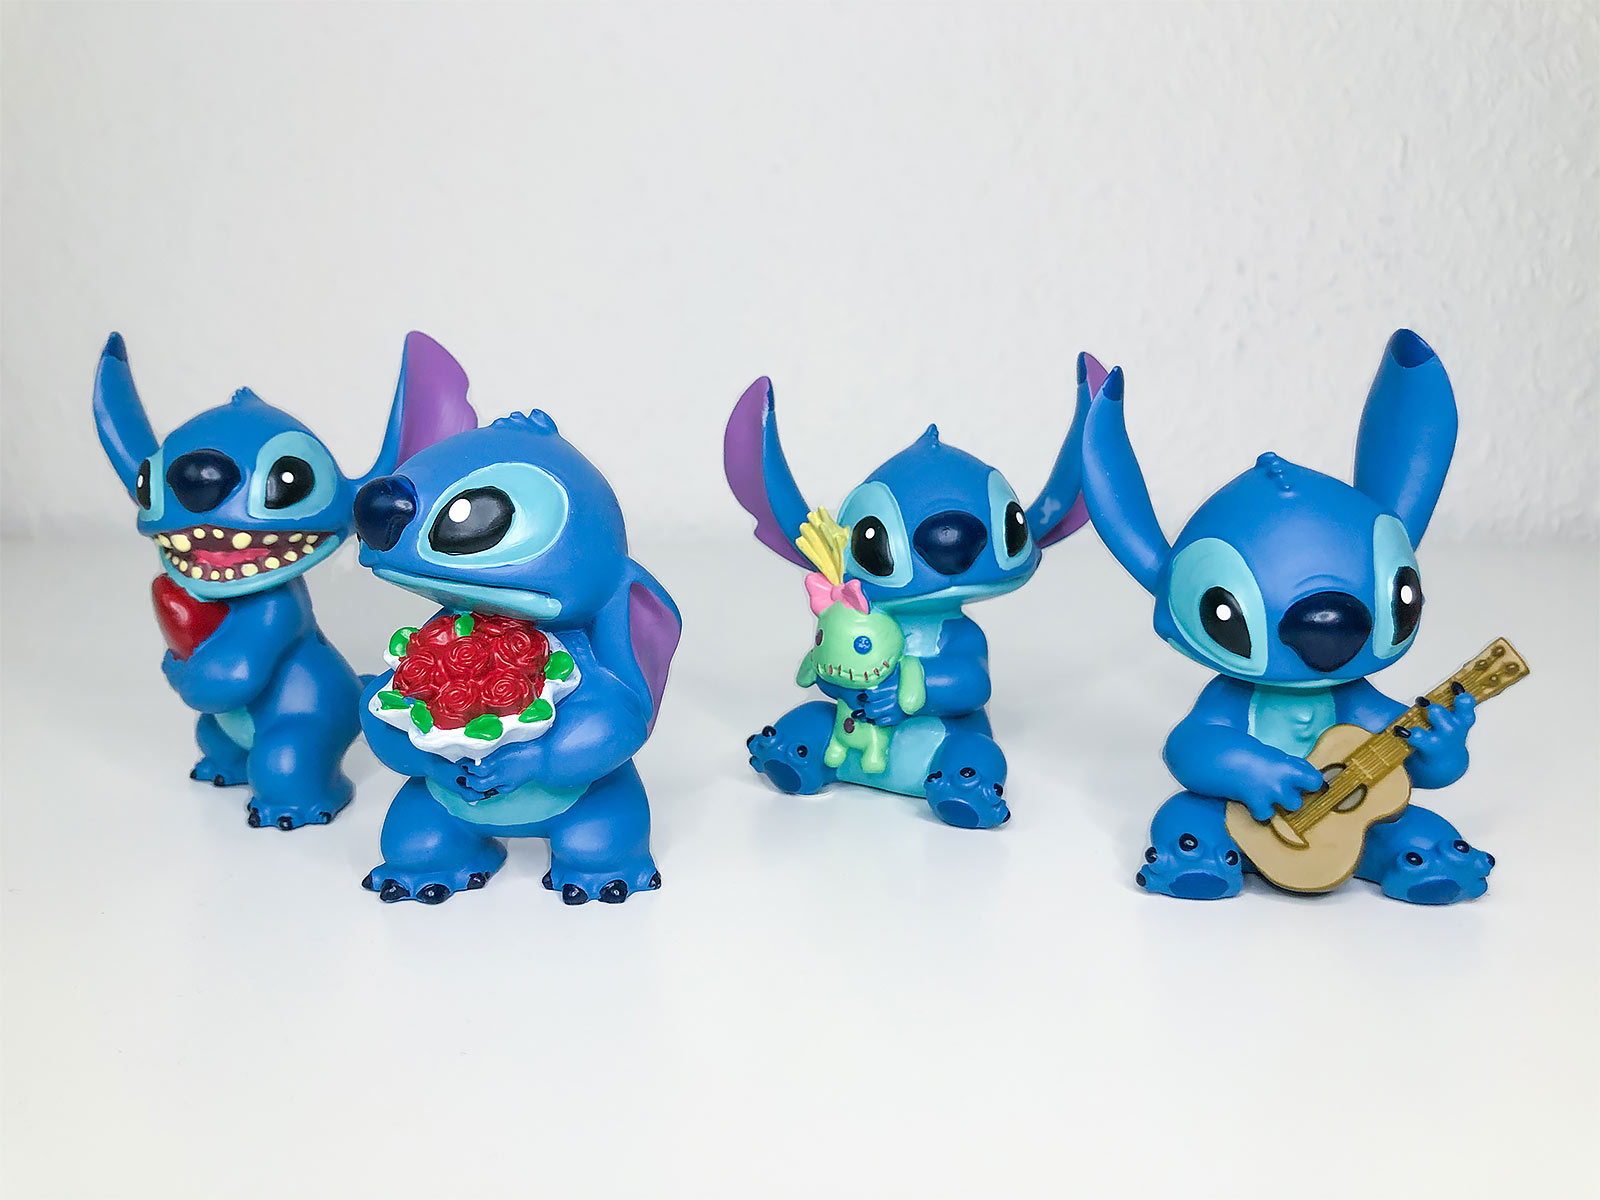 Lilo & Stitch - Figurine Stitch avec des Roses